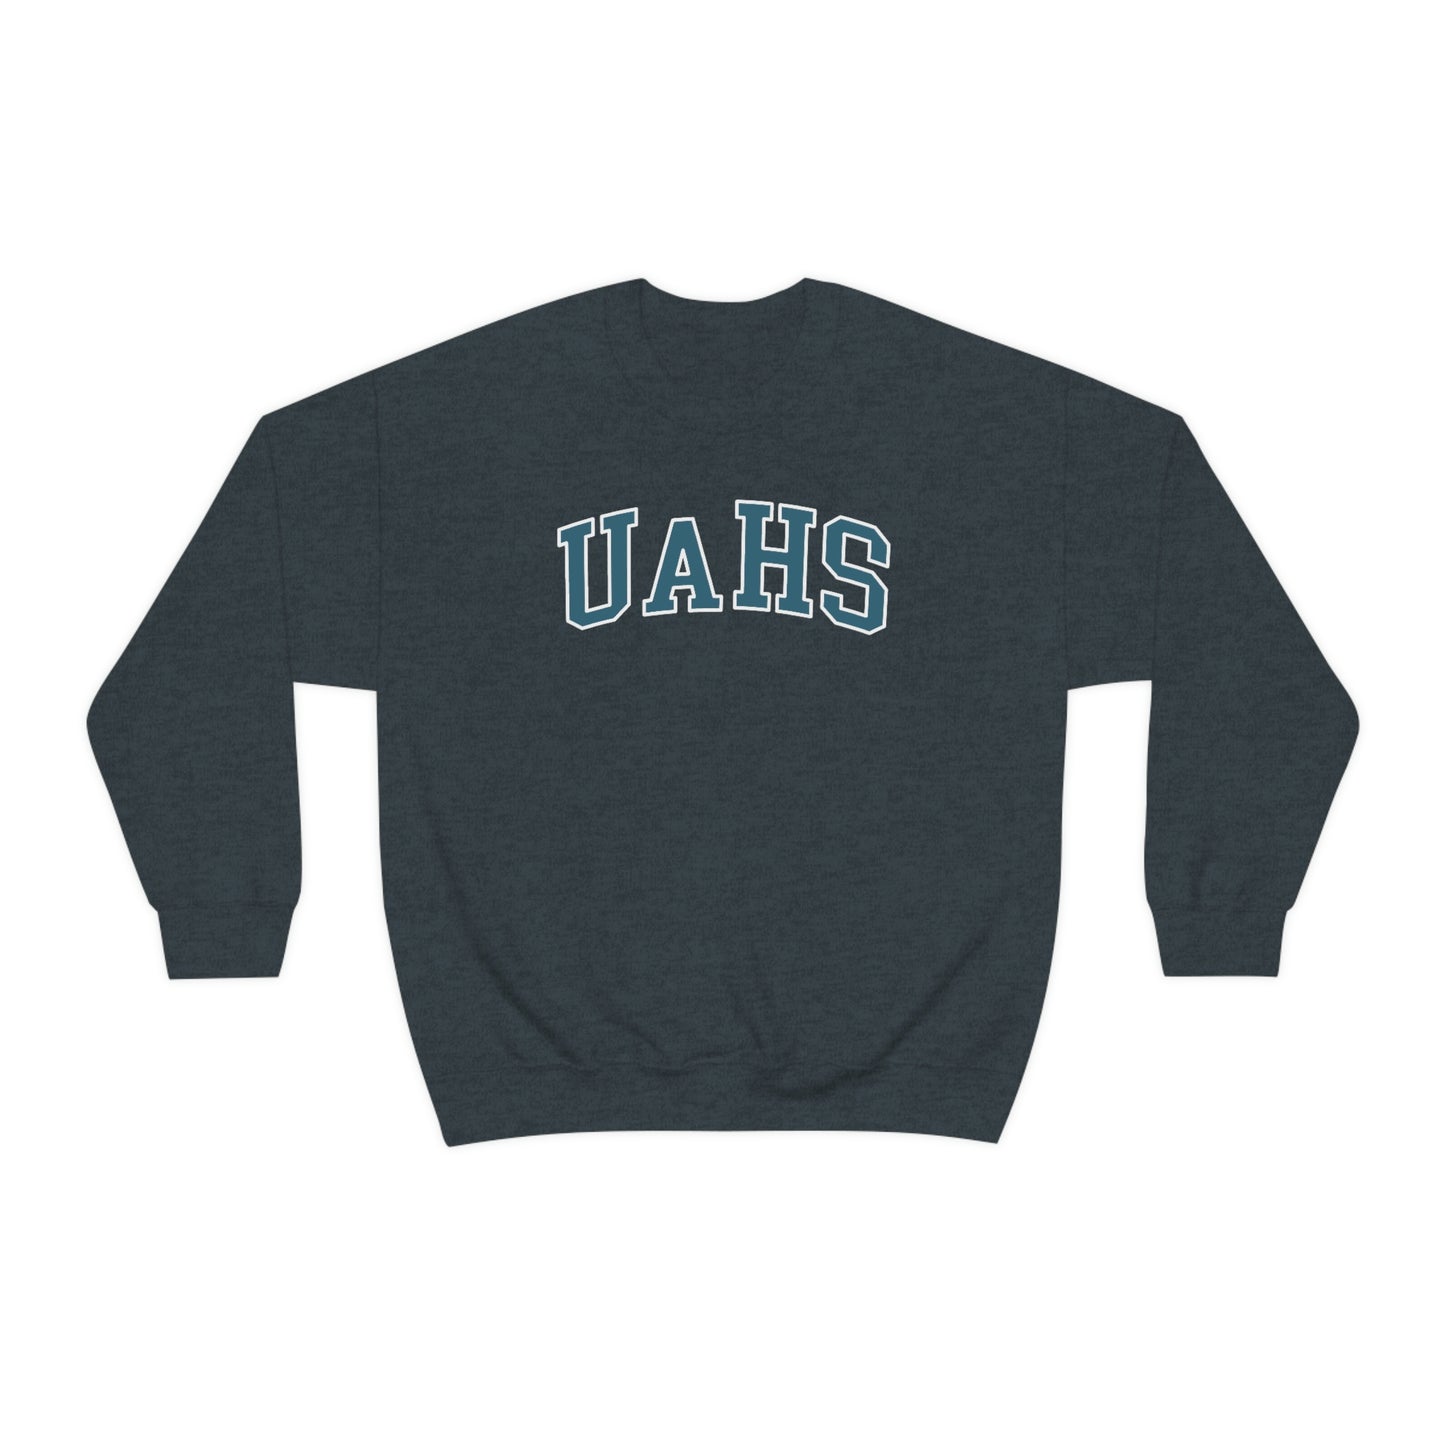 U A High UAHS sweatshirt jumper pullover